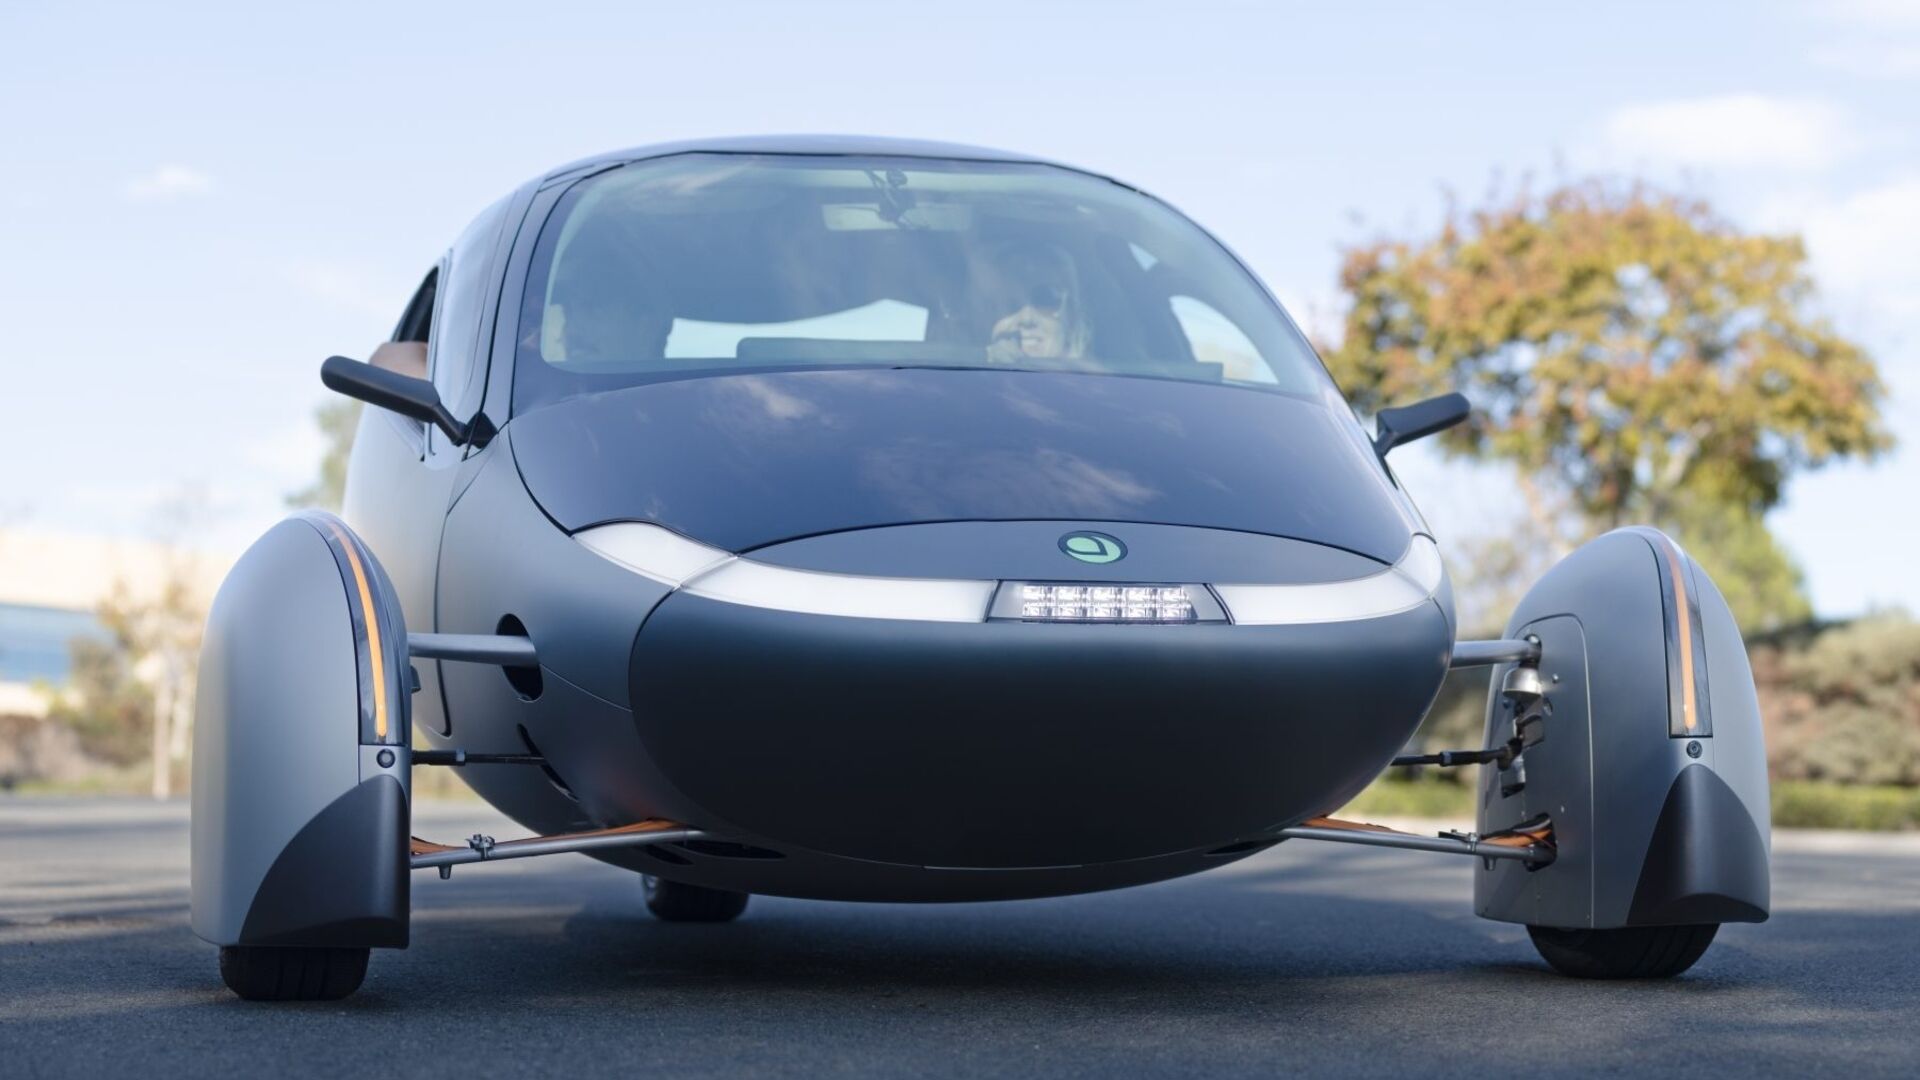 Mobil tenaga surya: Delta Aptera adalah mobil yang paling ramah lingkungan di dunia, dengan jangkauan 1600 km dengan tenaga baterai dan 70 km dengan tenaga surya